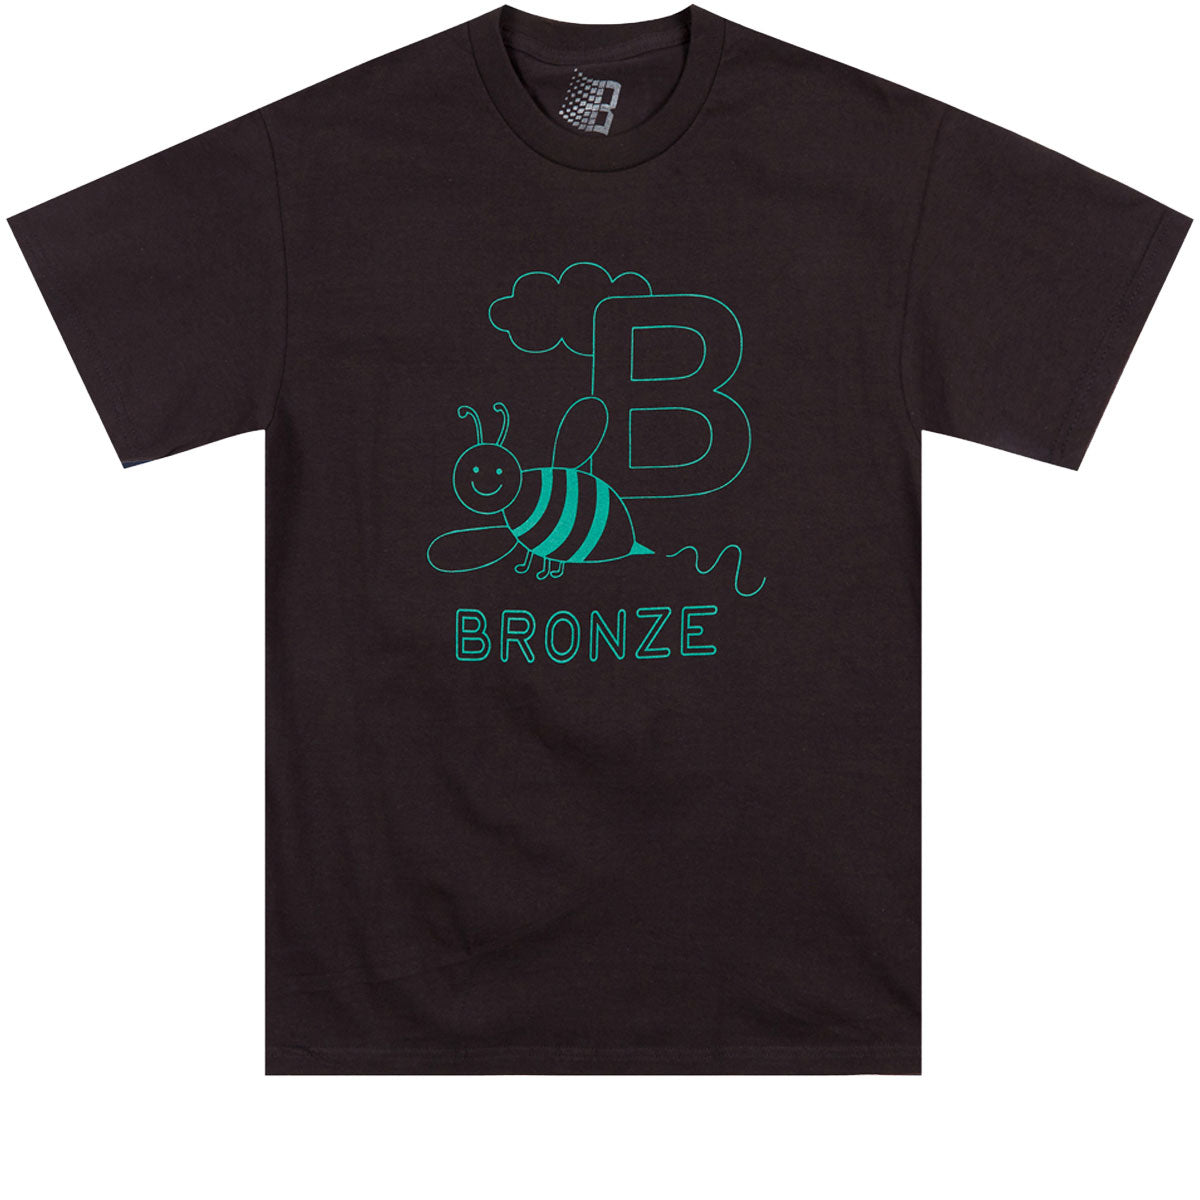 Bronze 56k B Is For Bronze T-Shirt - Black image 1